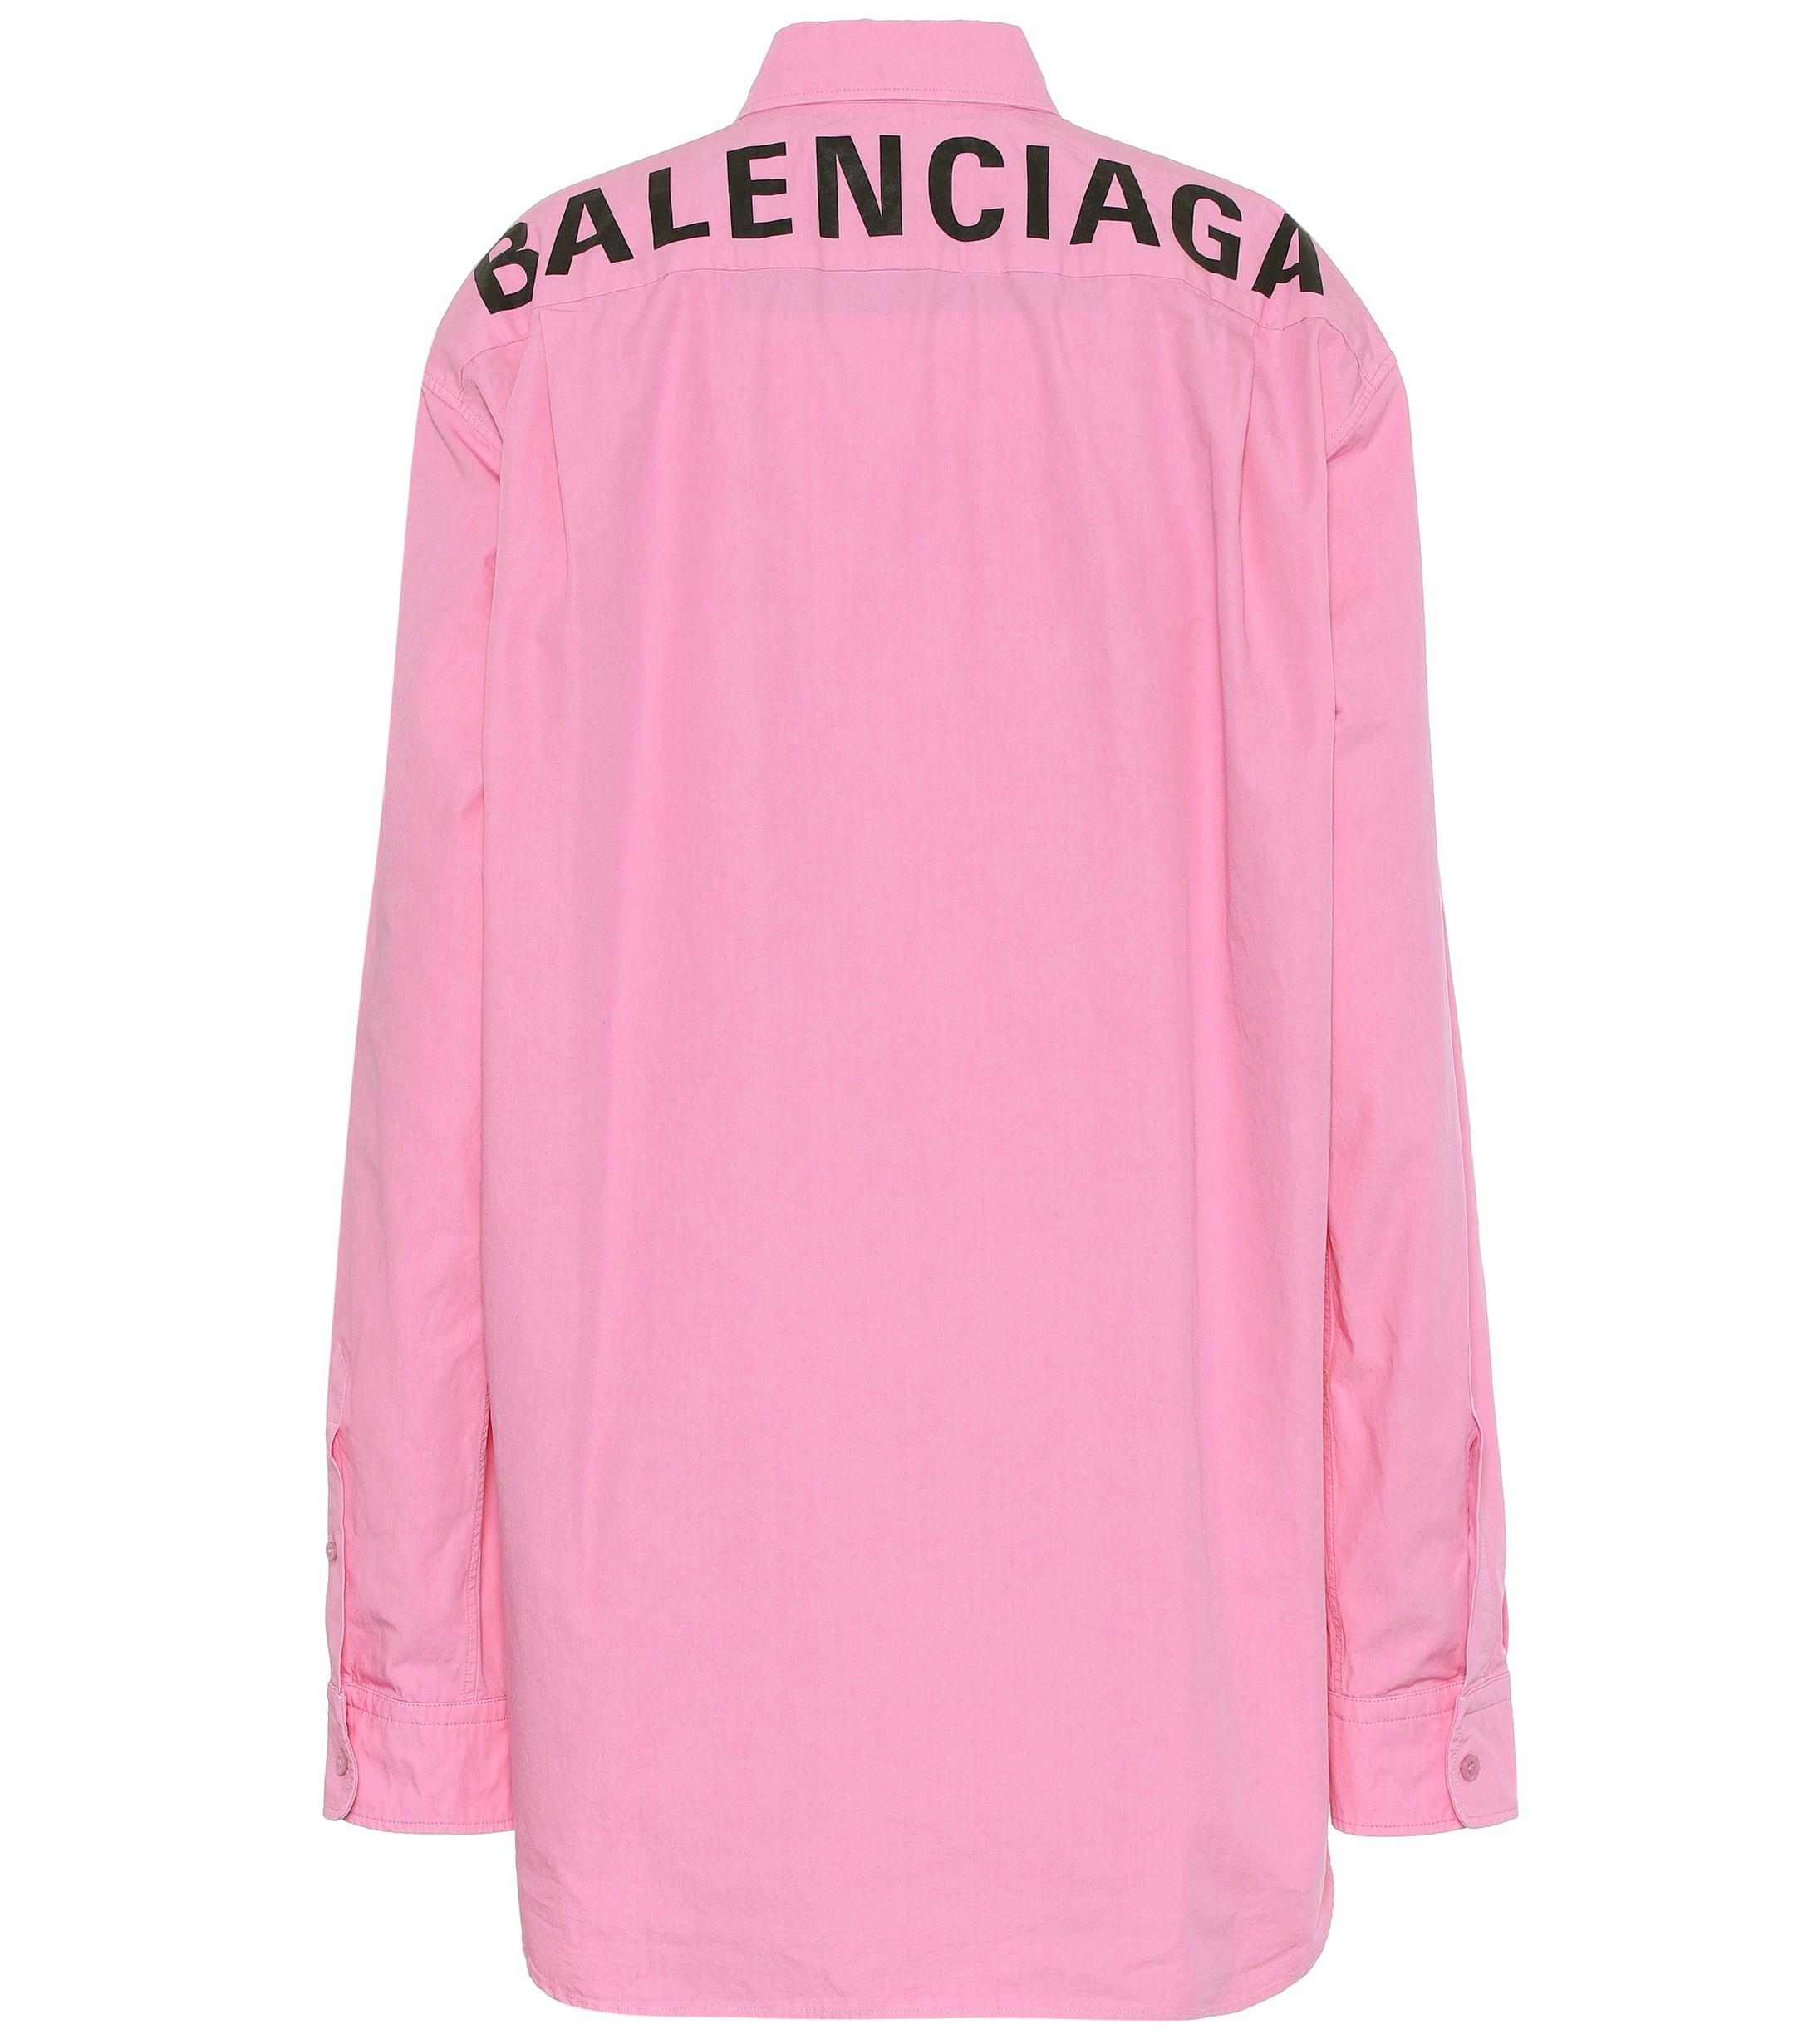 Pink Campaign TShirt by Balenciaga on Sale